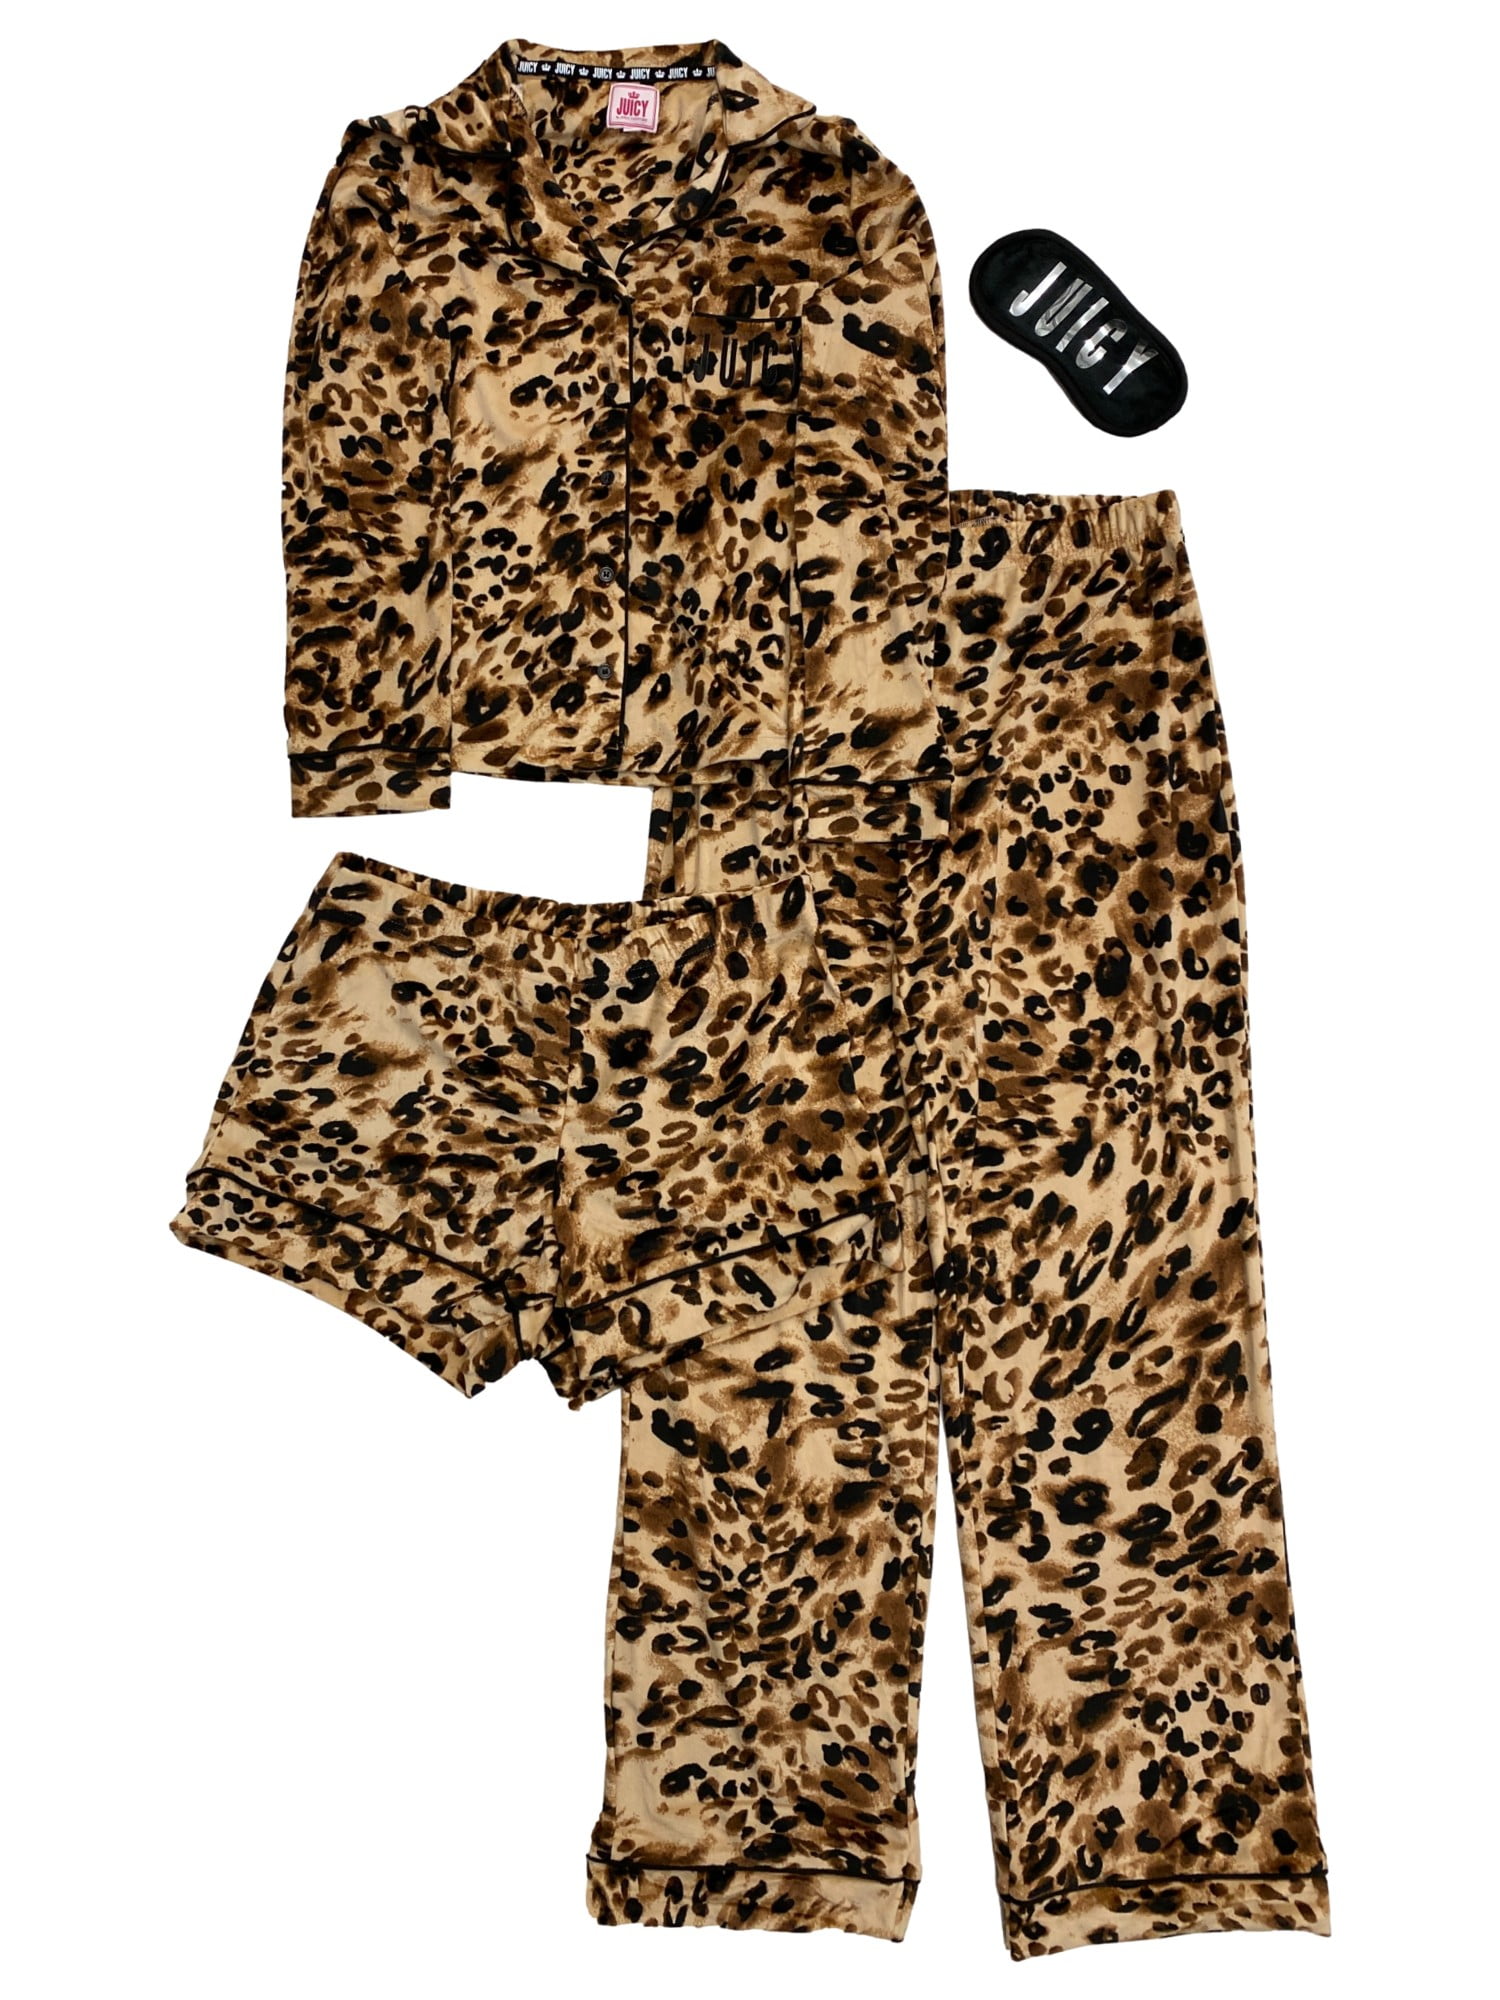 Juicy Couture Womens Plush Leopard Pajamas Shorts Pants Top Sleep